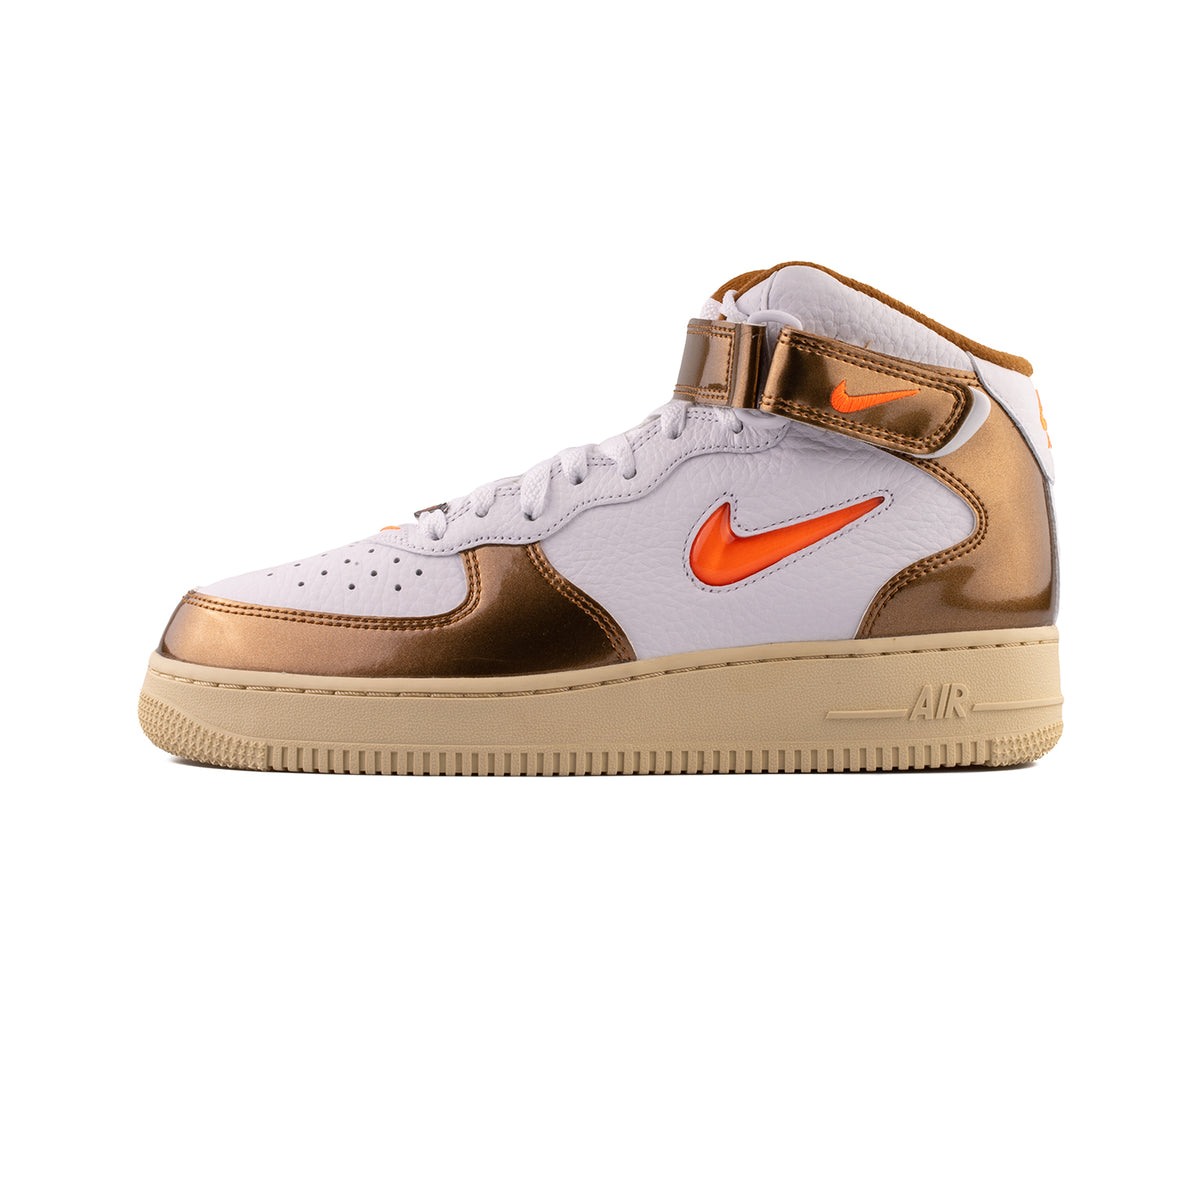 Size 11 - Nike Air Force 1 Mid QS Jewel Swoosh Orange White Ale Brown  DH5623-100